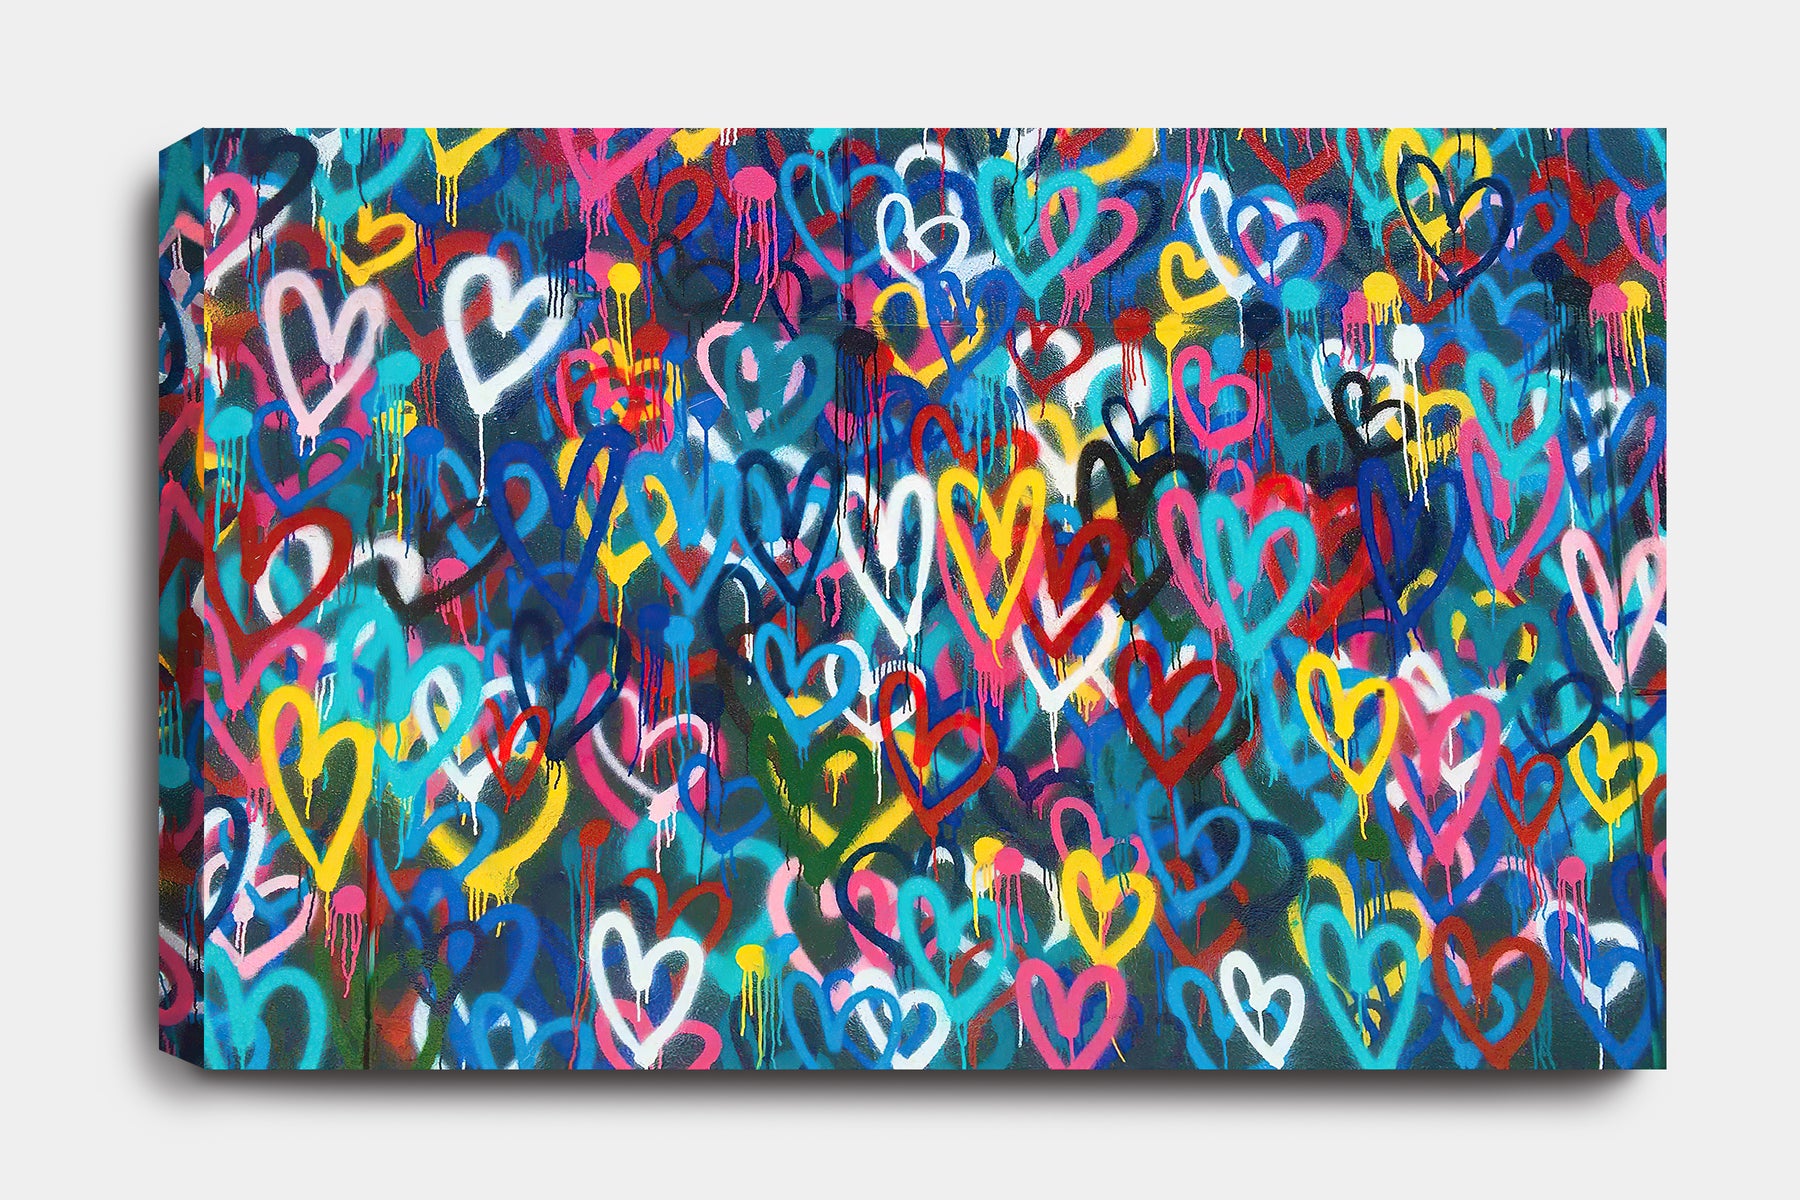 LOVE HEARTS - GRAFFITI CANVAS WALL ART